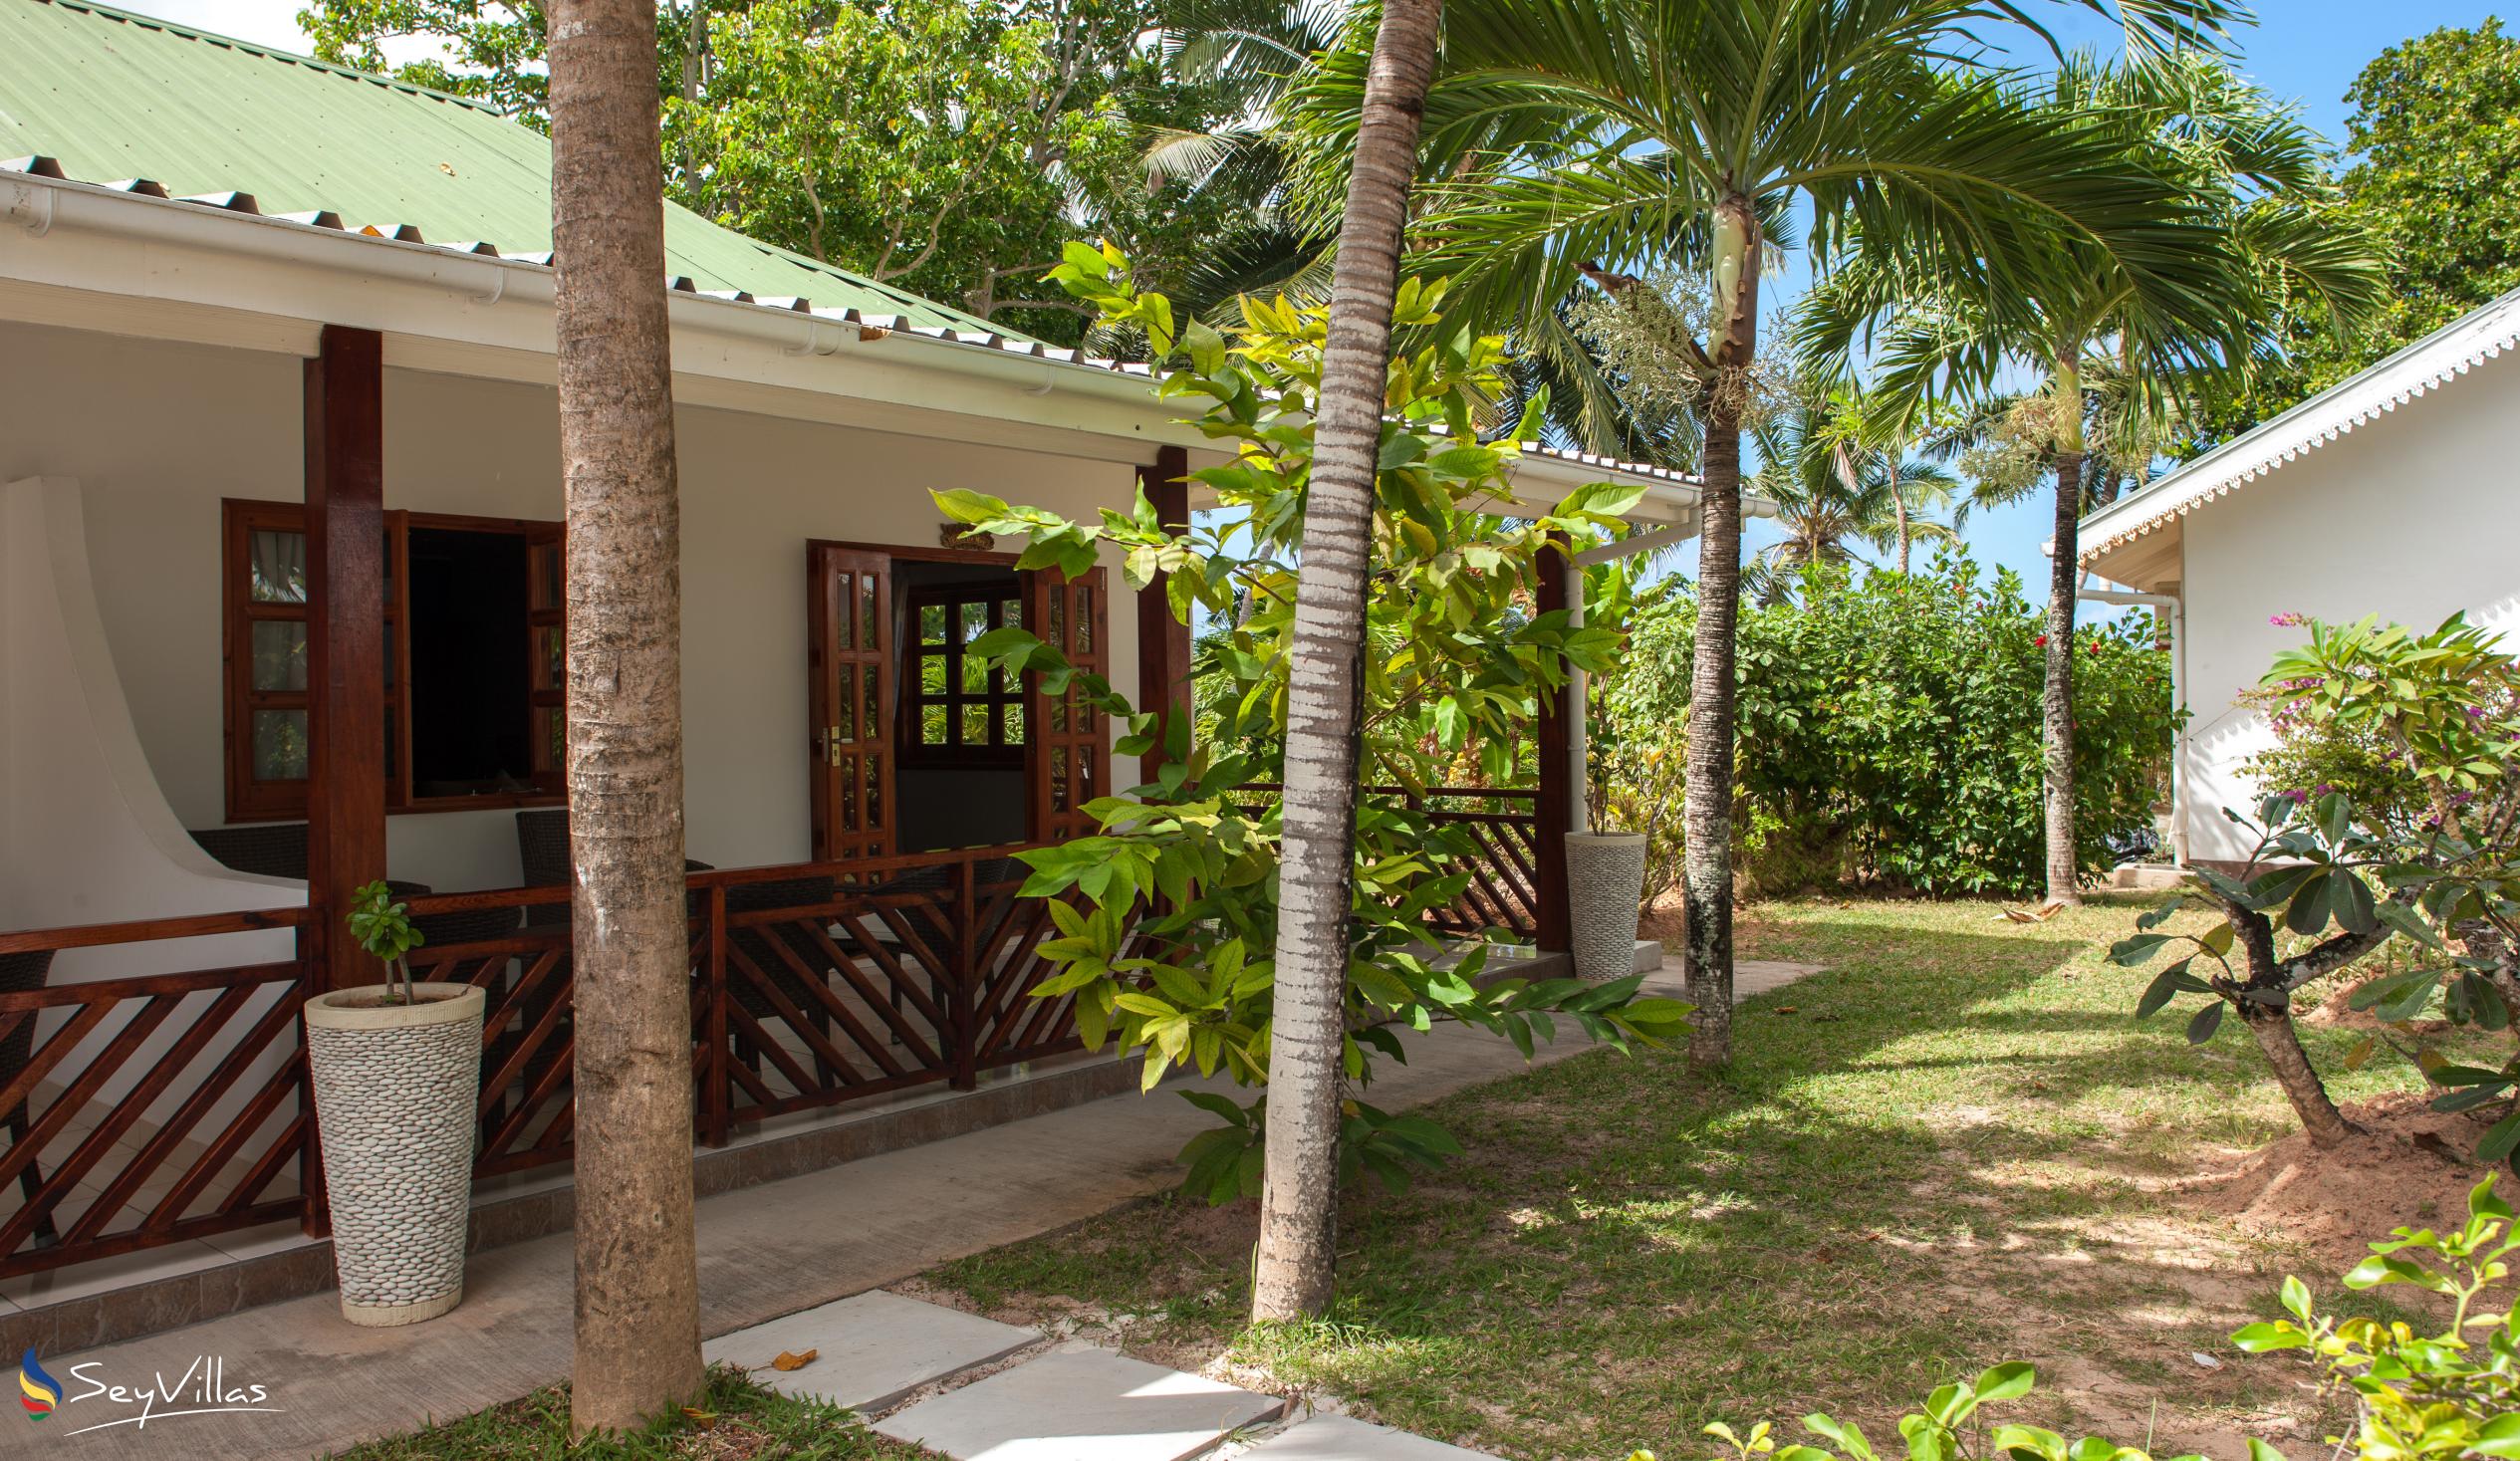 Foto 14: Villas de Mer - Aussenbereich - Praslin (Seychellen)